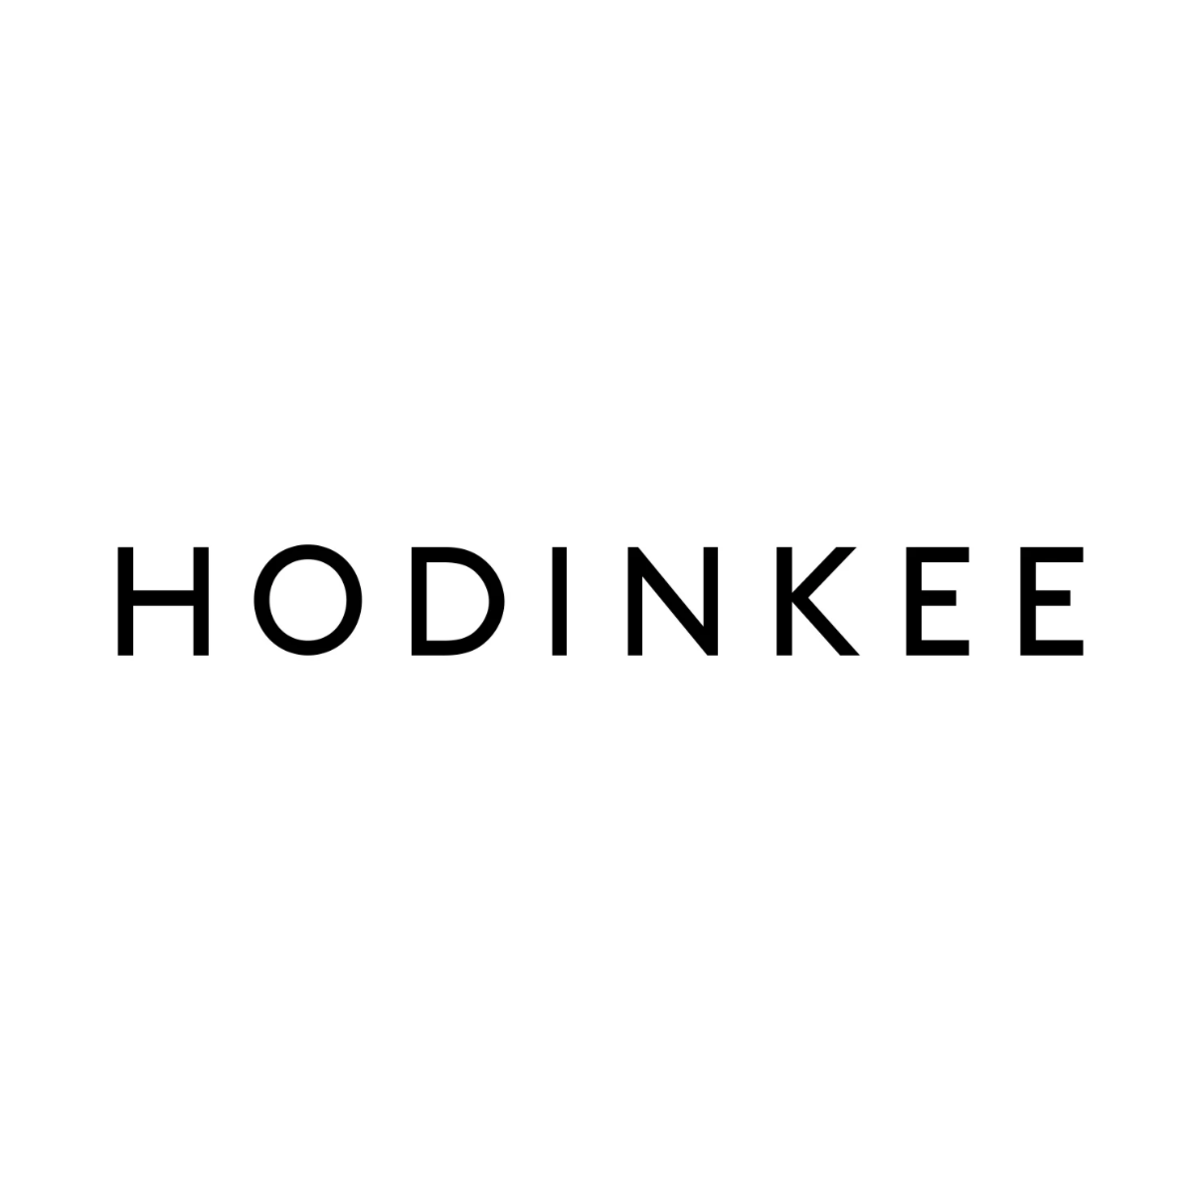 1200px-Hodinkee_logo-1.png